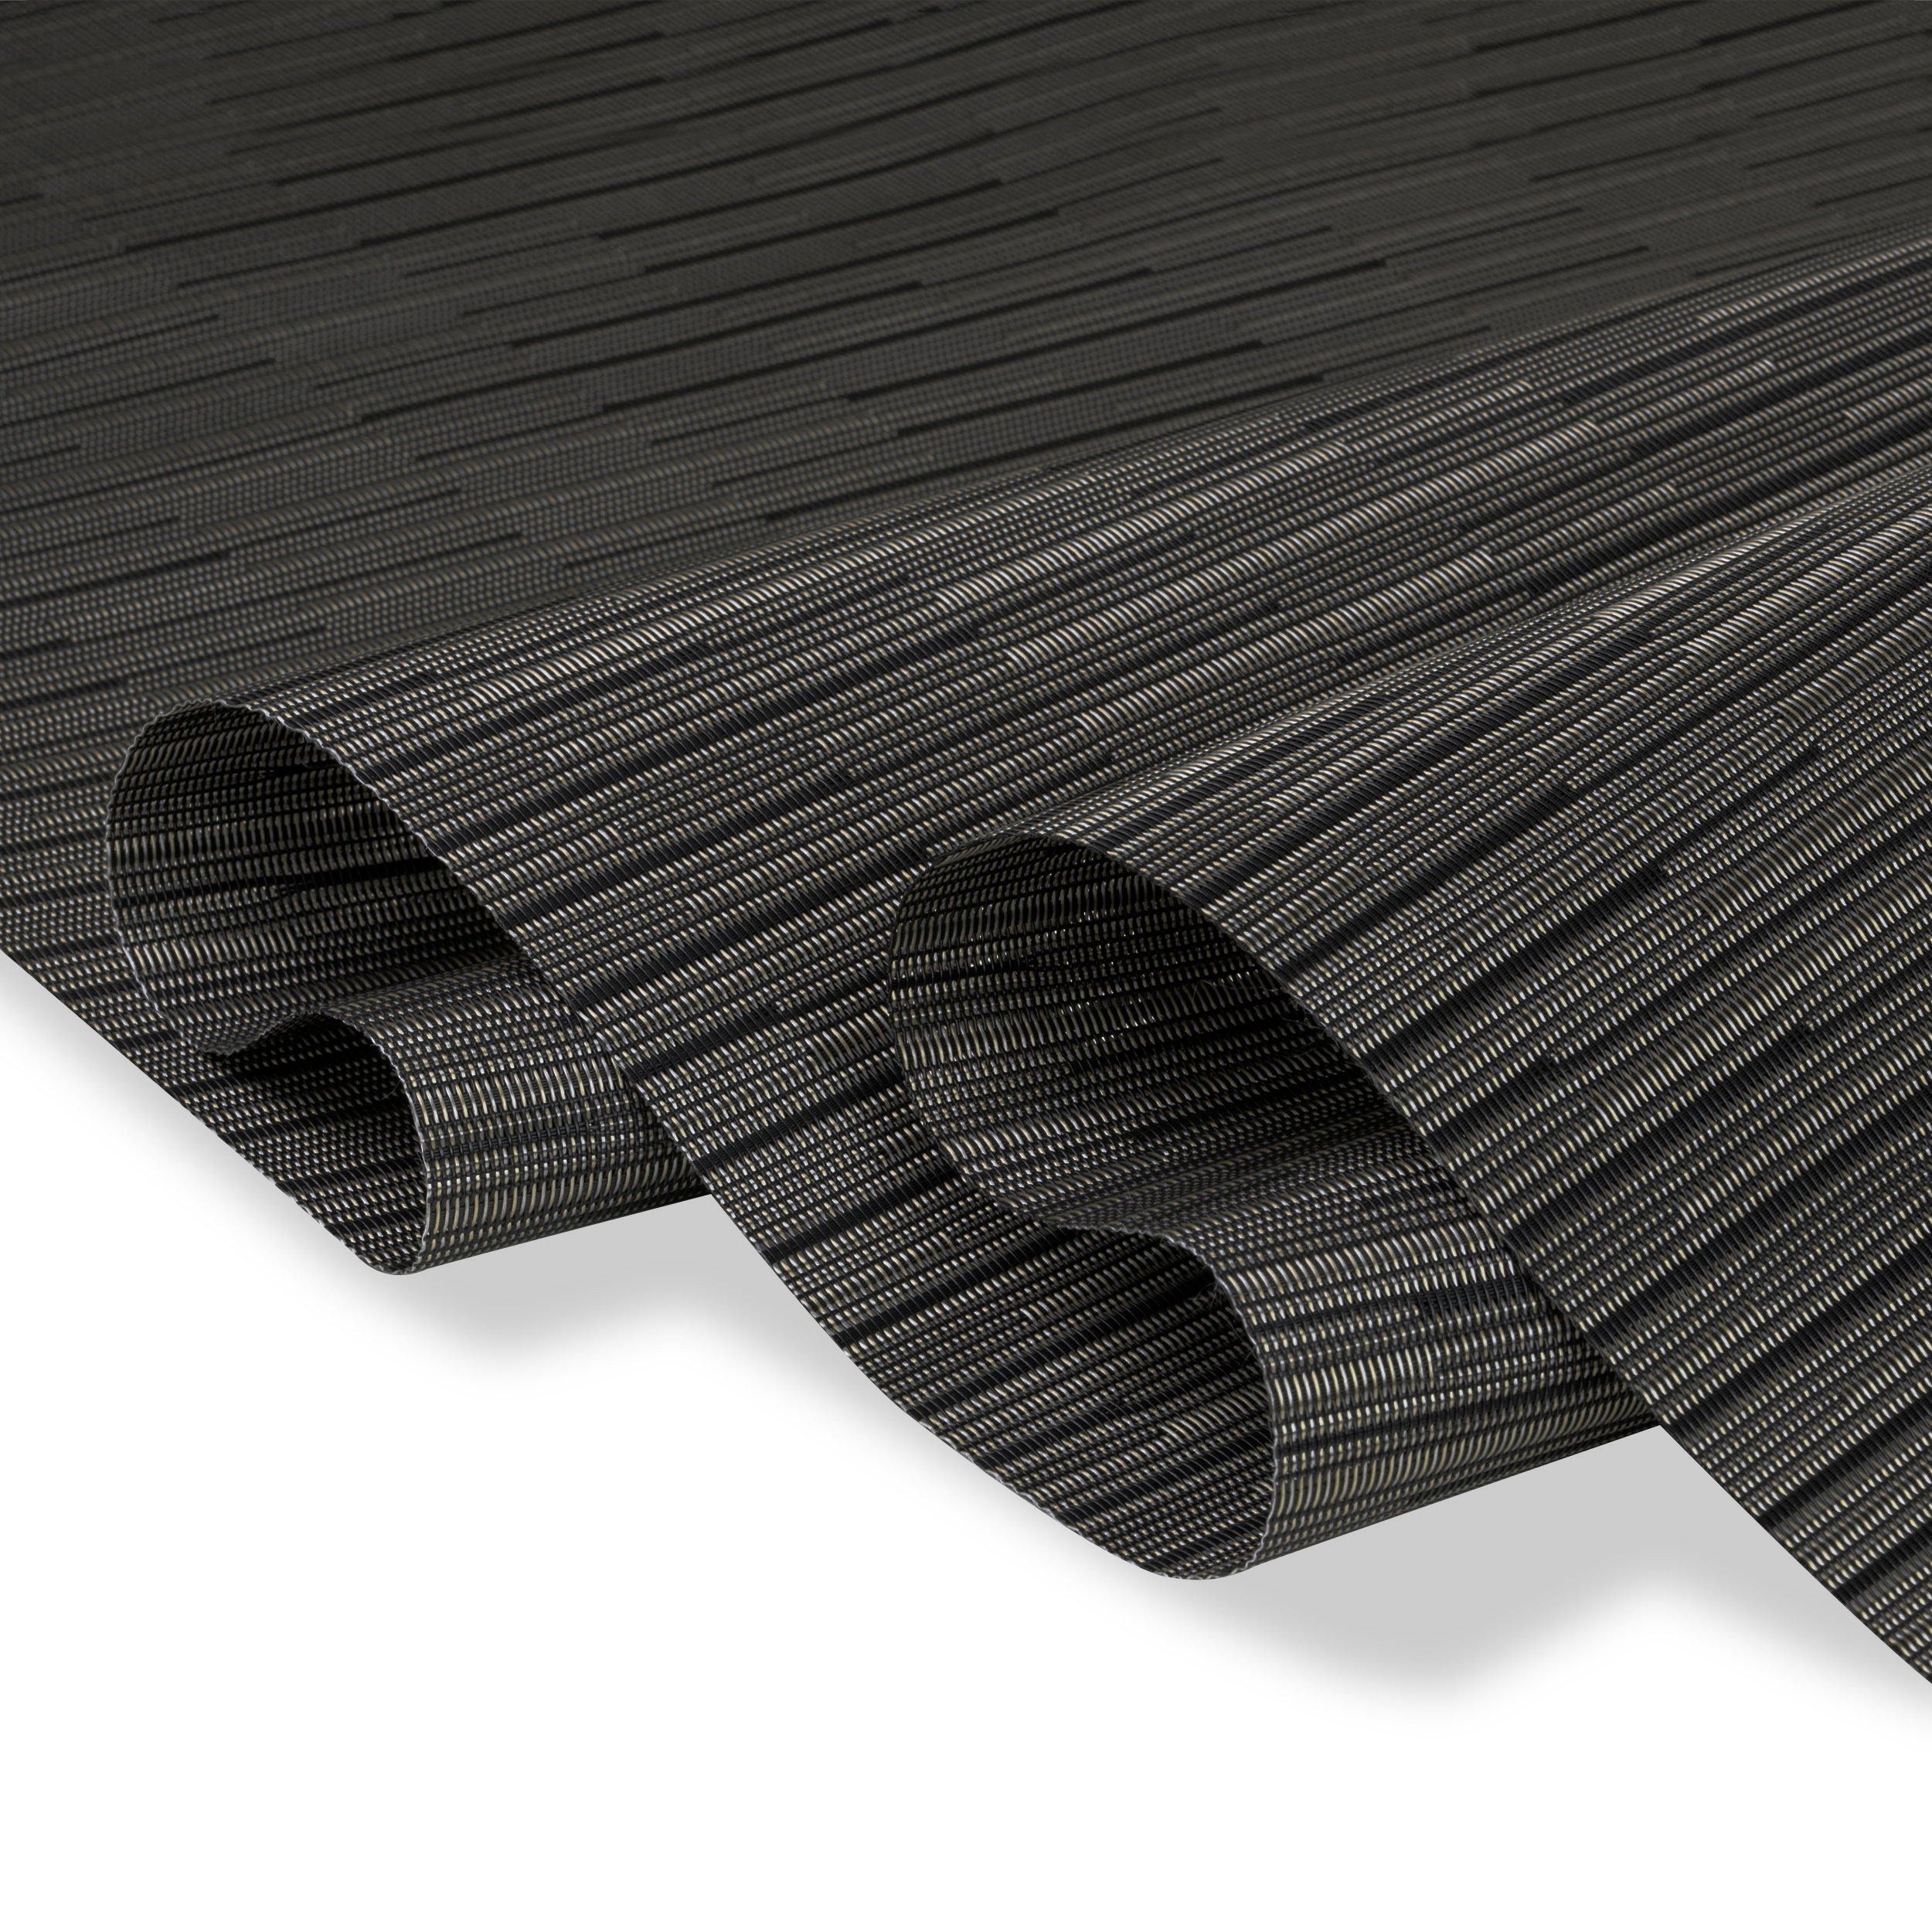 Rod Desyne Charcoal Camo Blind 7-Panel Single Rail Panel Track Extendable  110-153W x 94H, width 23.5